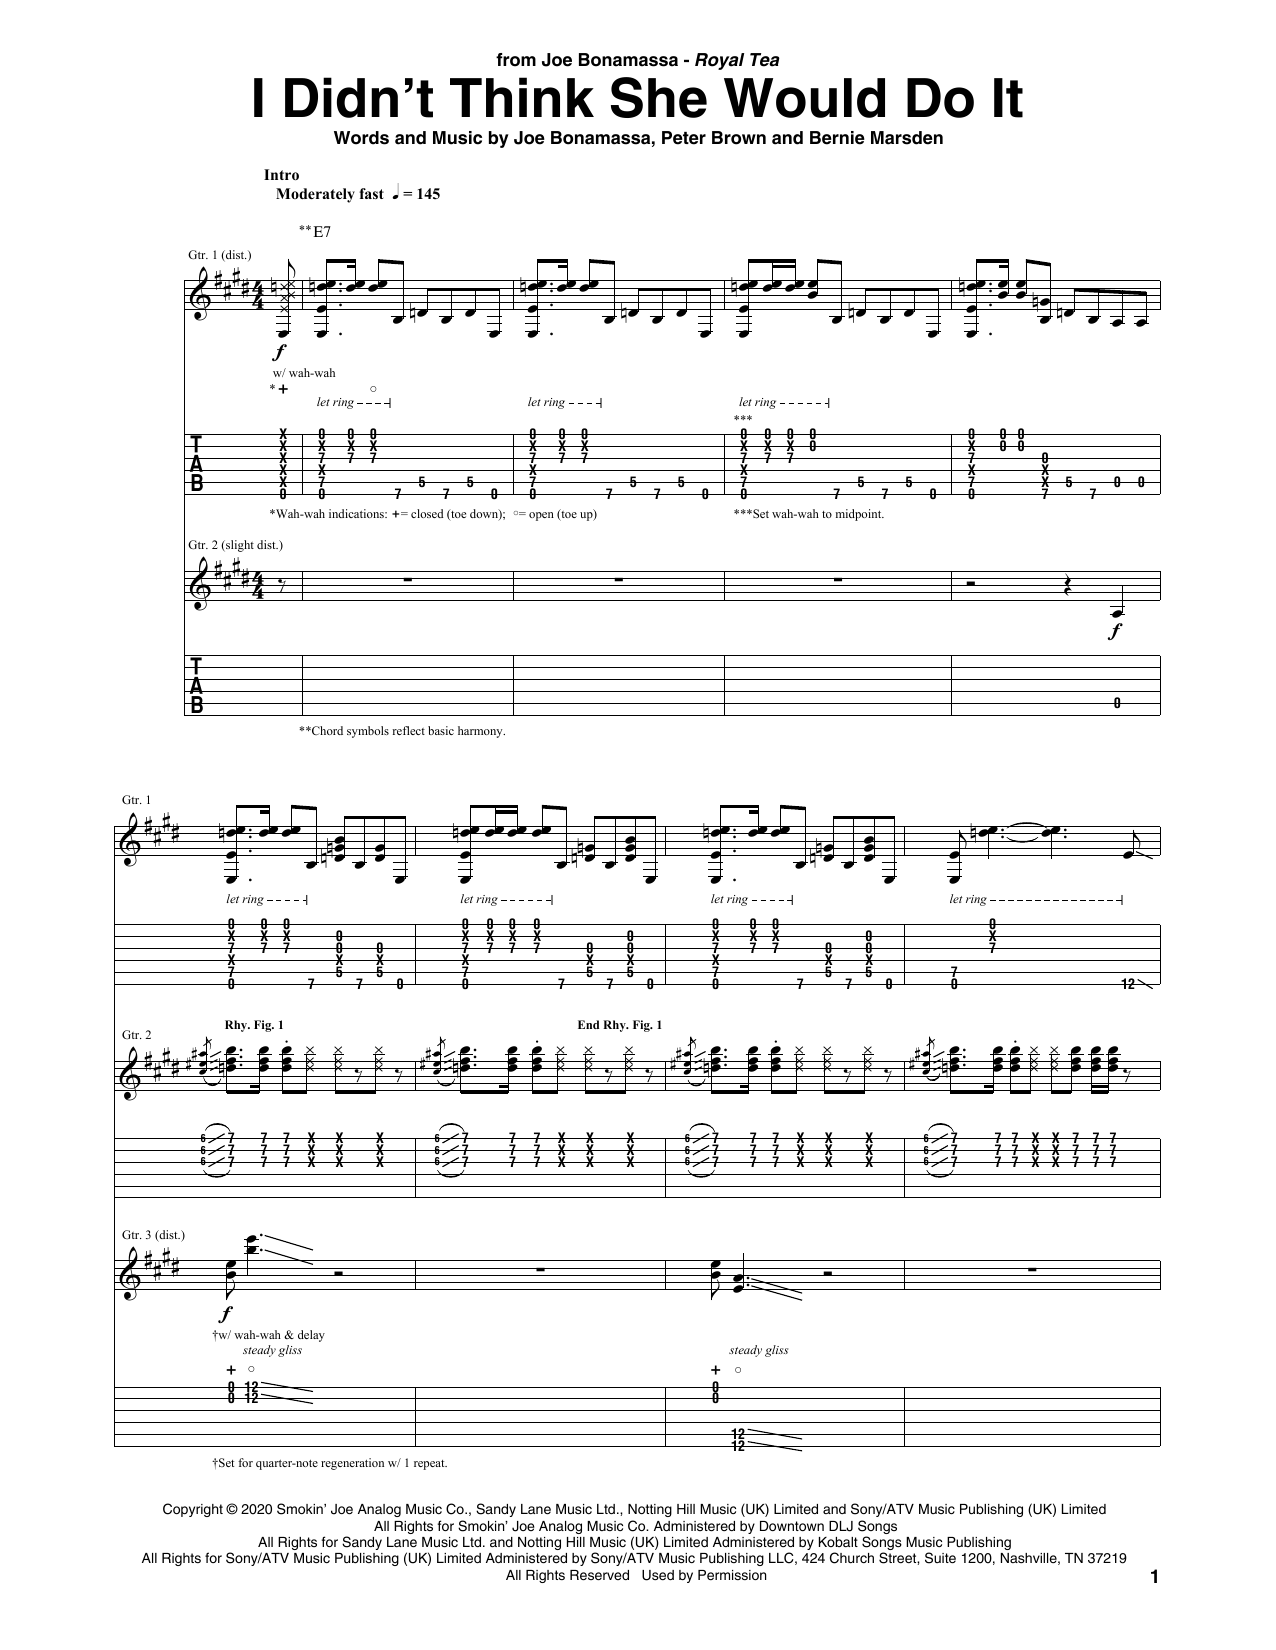 Joe Bonamassa I Didn't Think She Would Do It Sheet Music Notes & Chords for Guitar Tab - Download or Print PDF